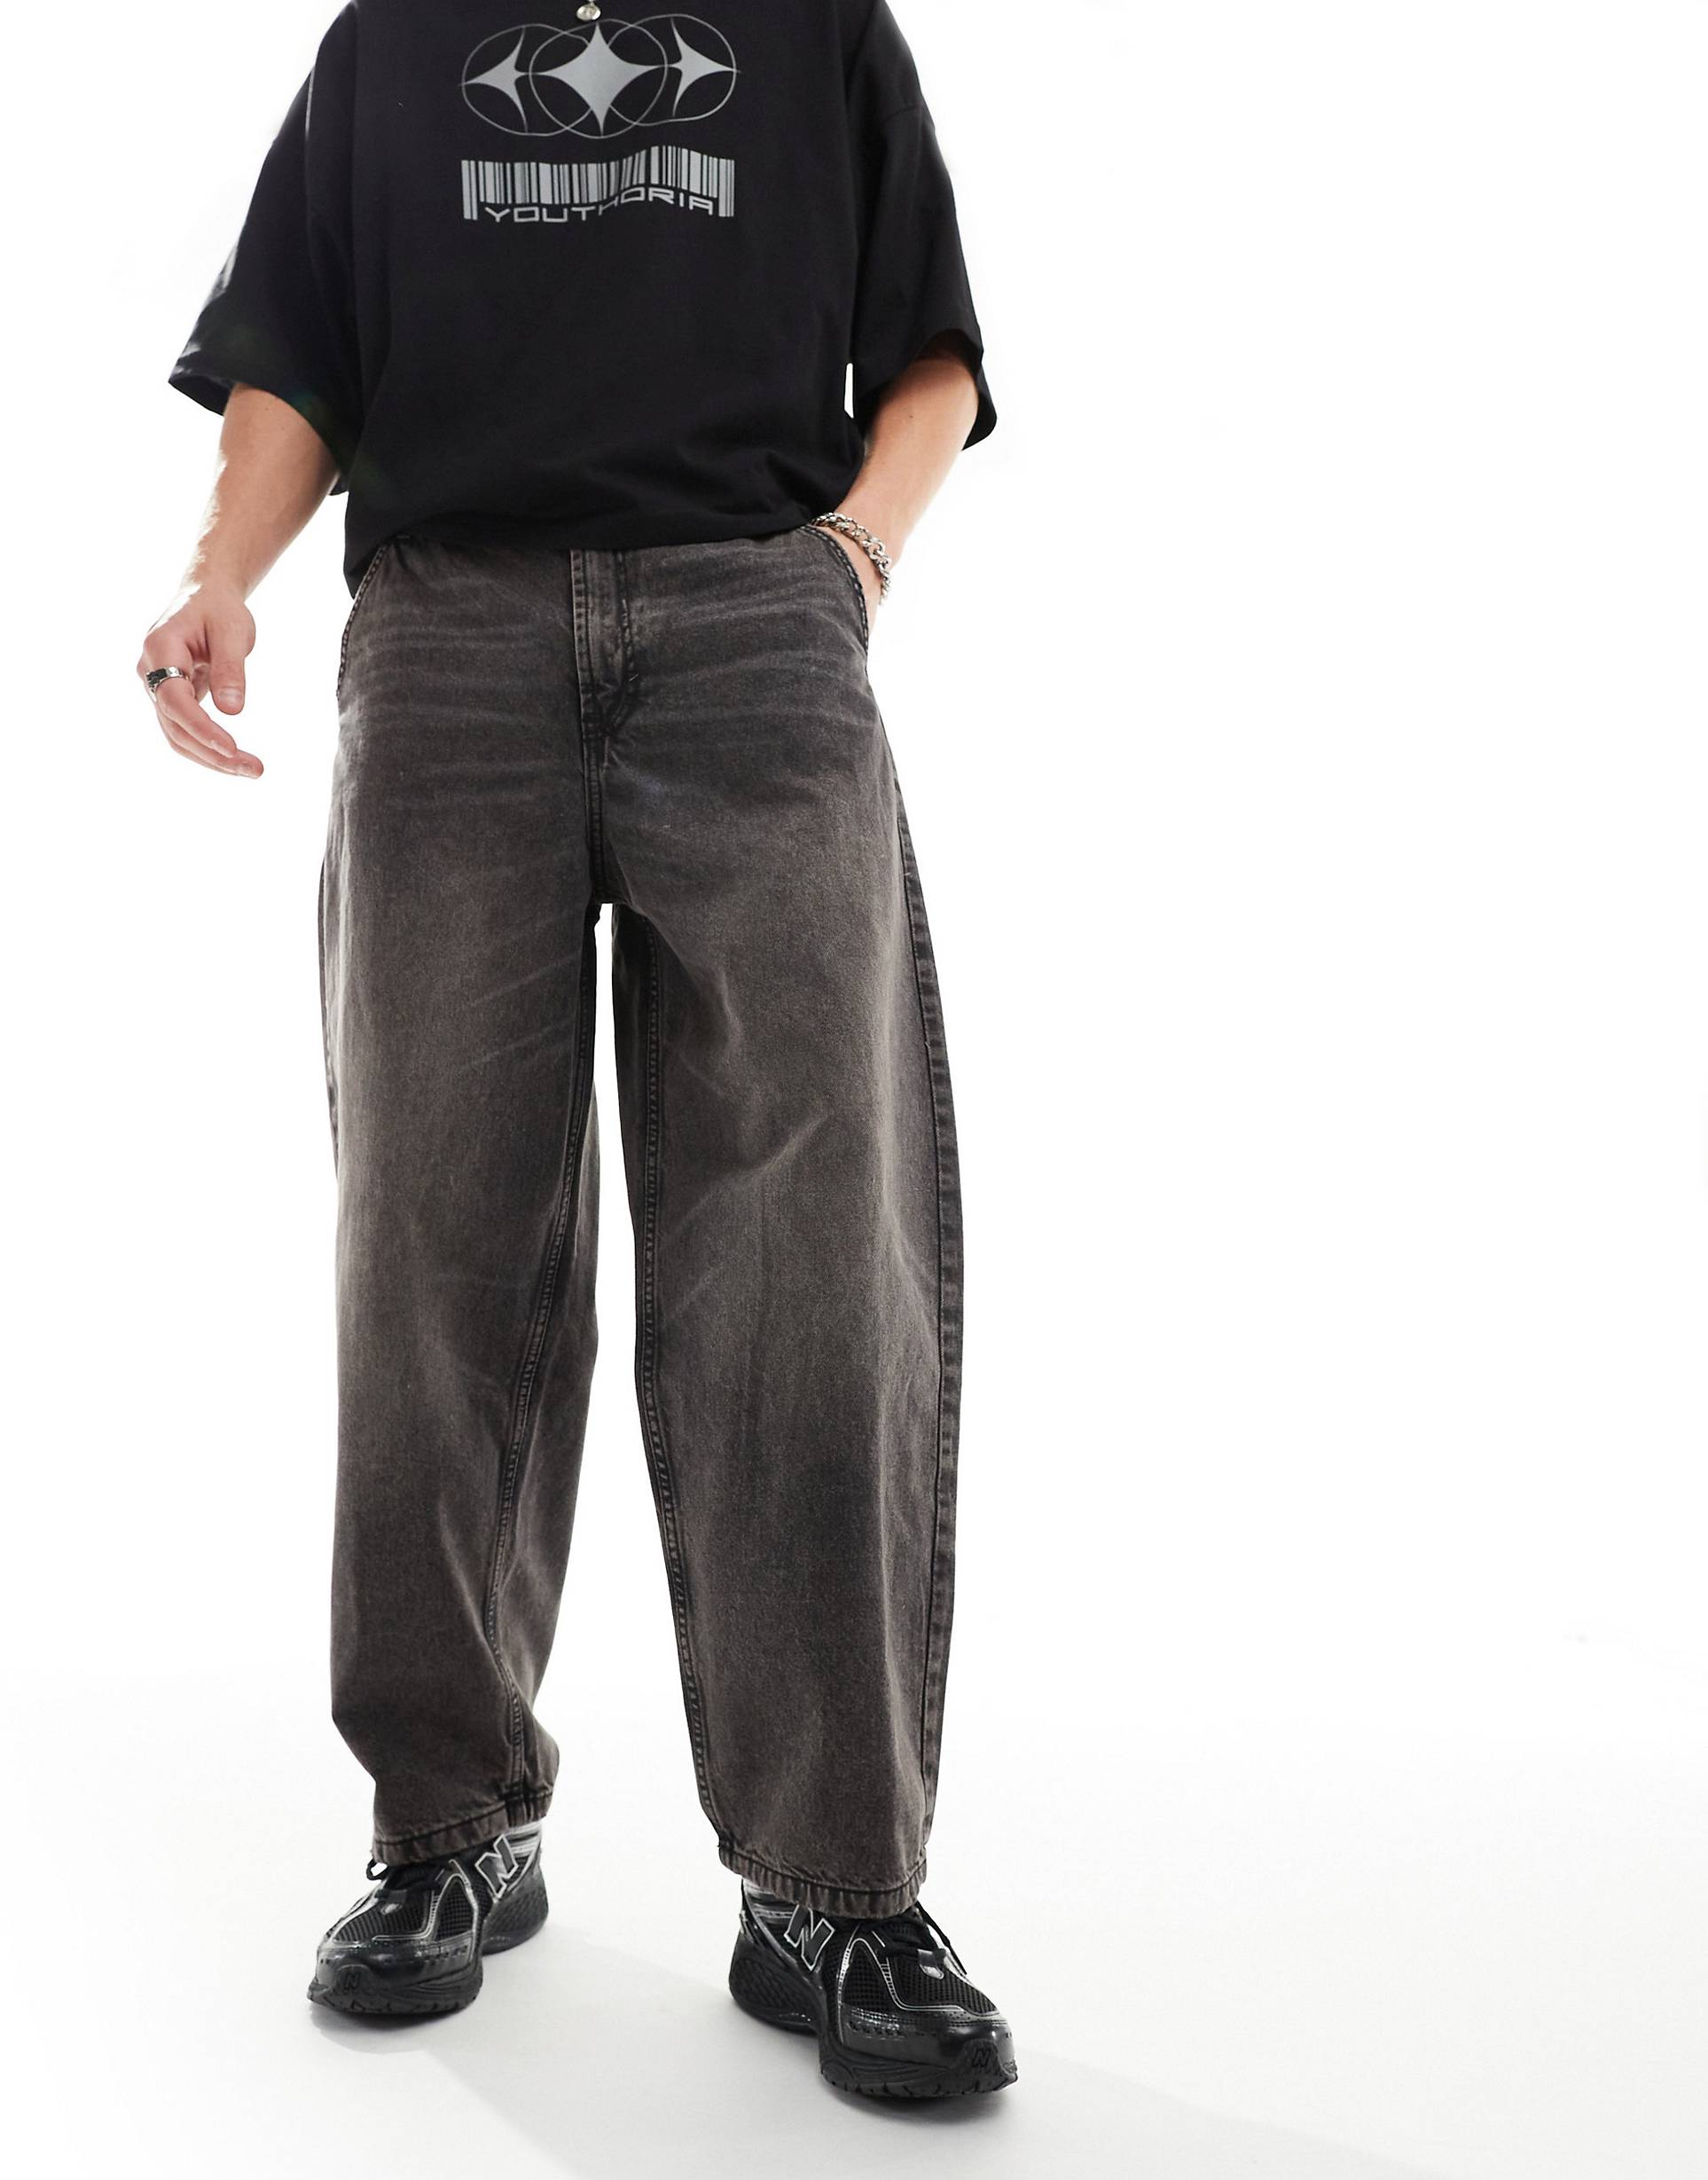 Джинсы Bershka Skater Fit Casted, коричневый джинсы bershka светлые 38 размер